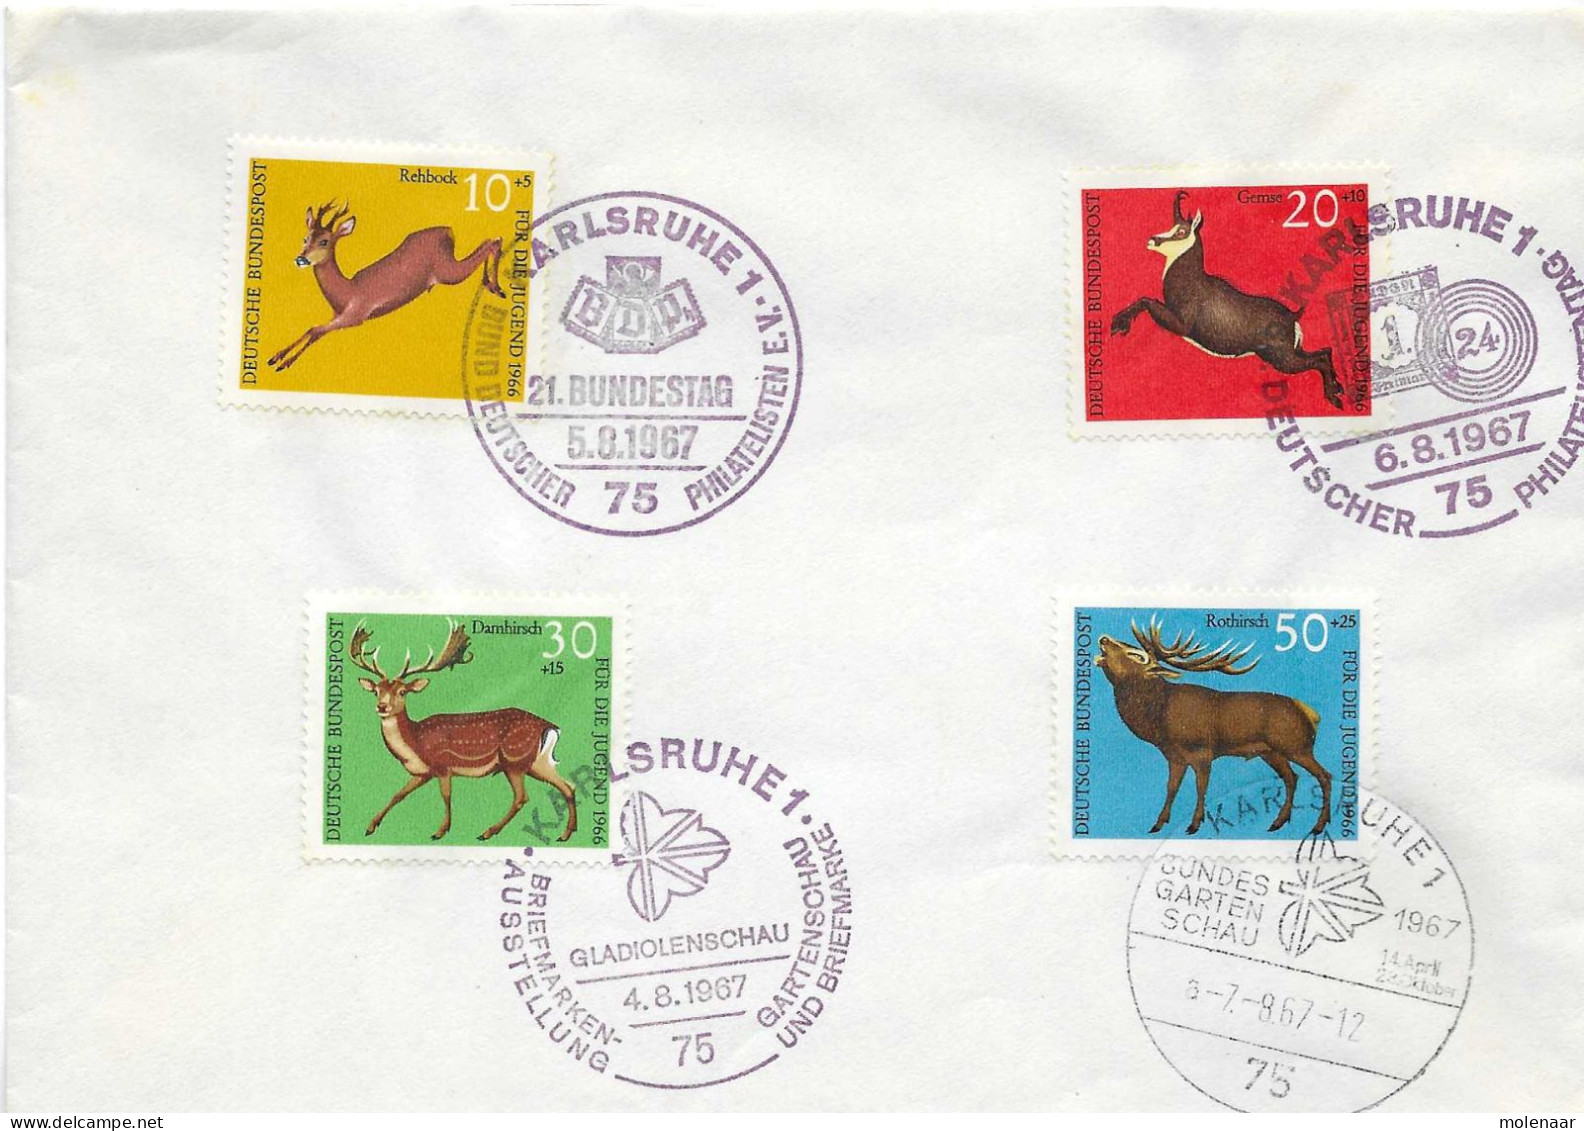 Postzegels > Europa > Duitsland > West-Duitsland > 1960-1969 > Brief Met 511-514 4 Verschillende Stempels (17300) - Covers & Documents